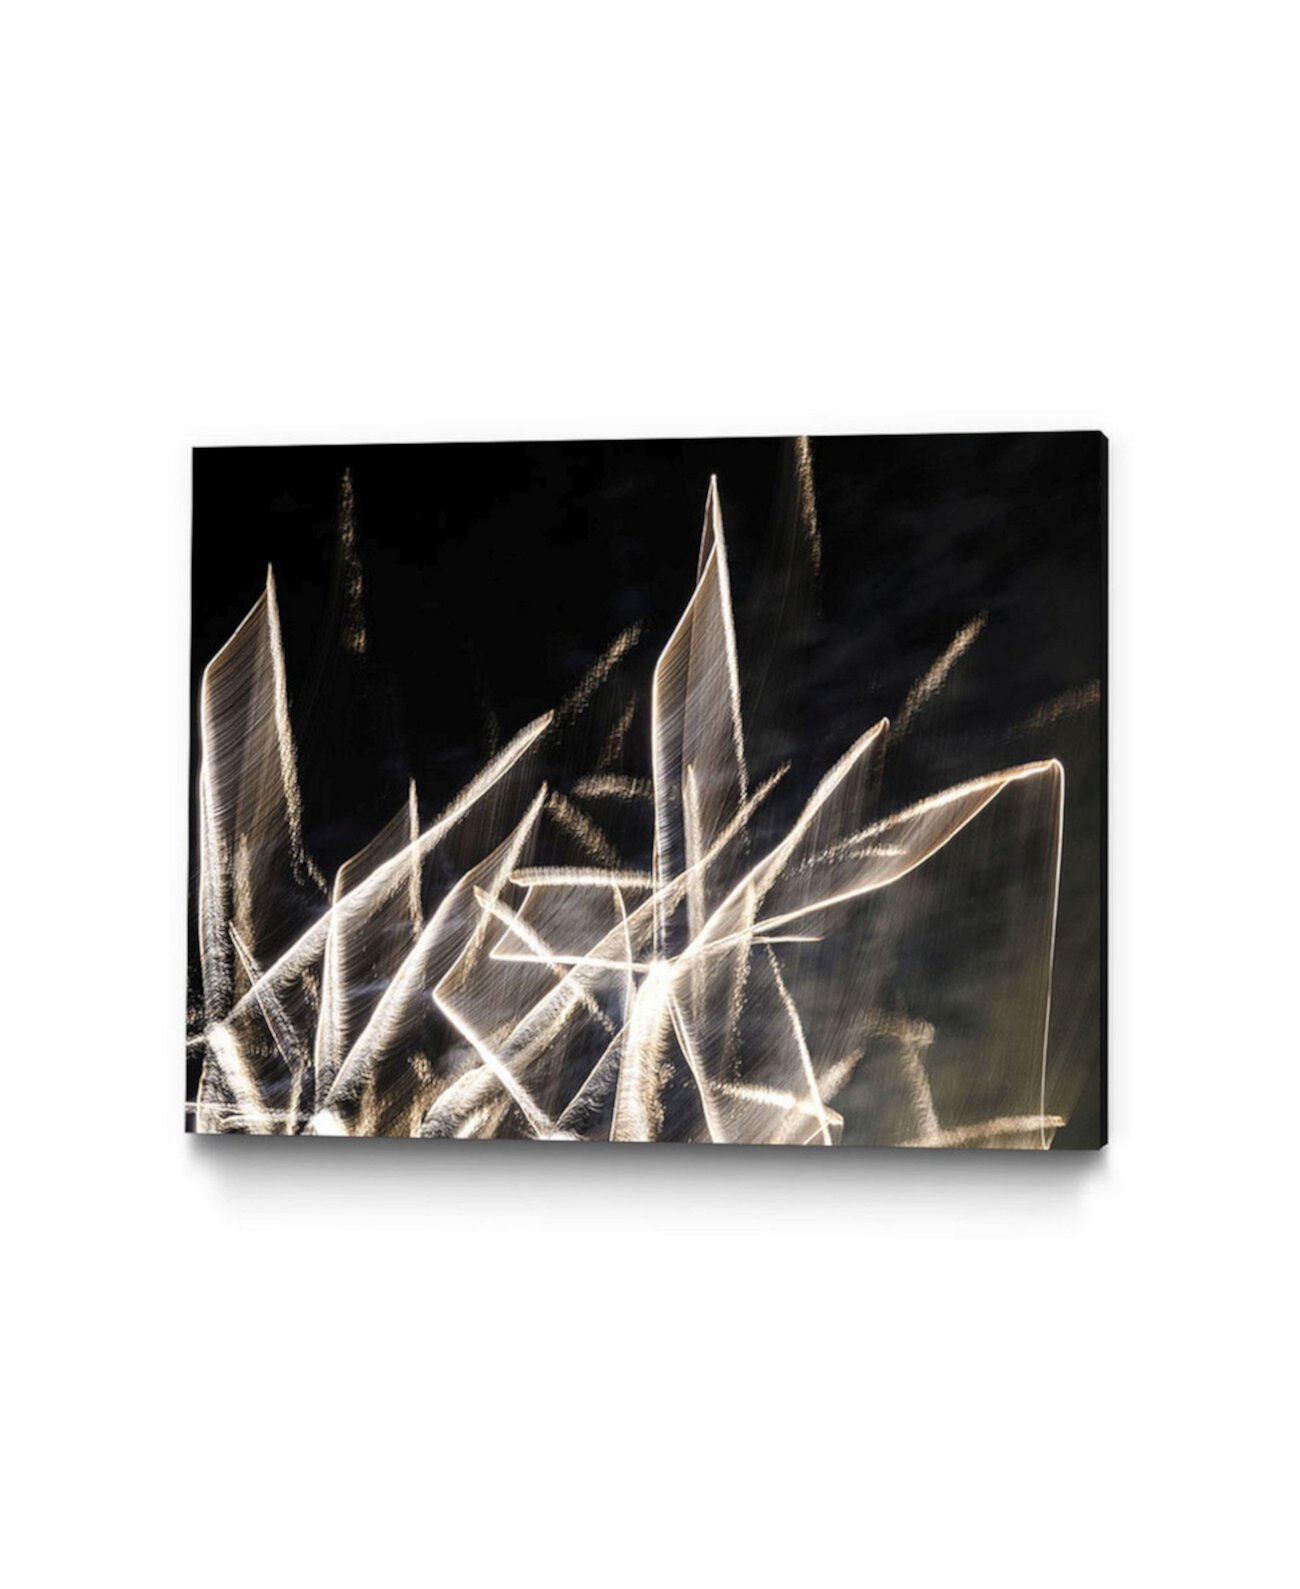 36 "x 24" Шифоновая световая скульптура Музейная печать на холсте Giant Art